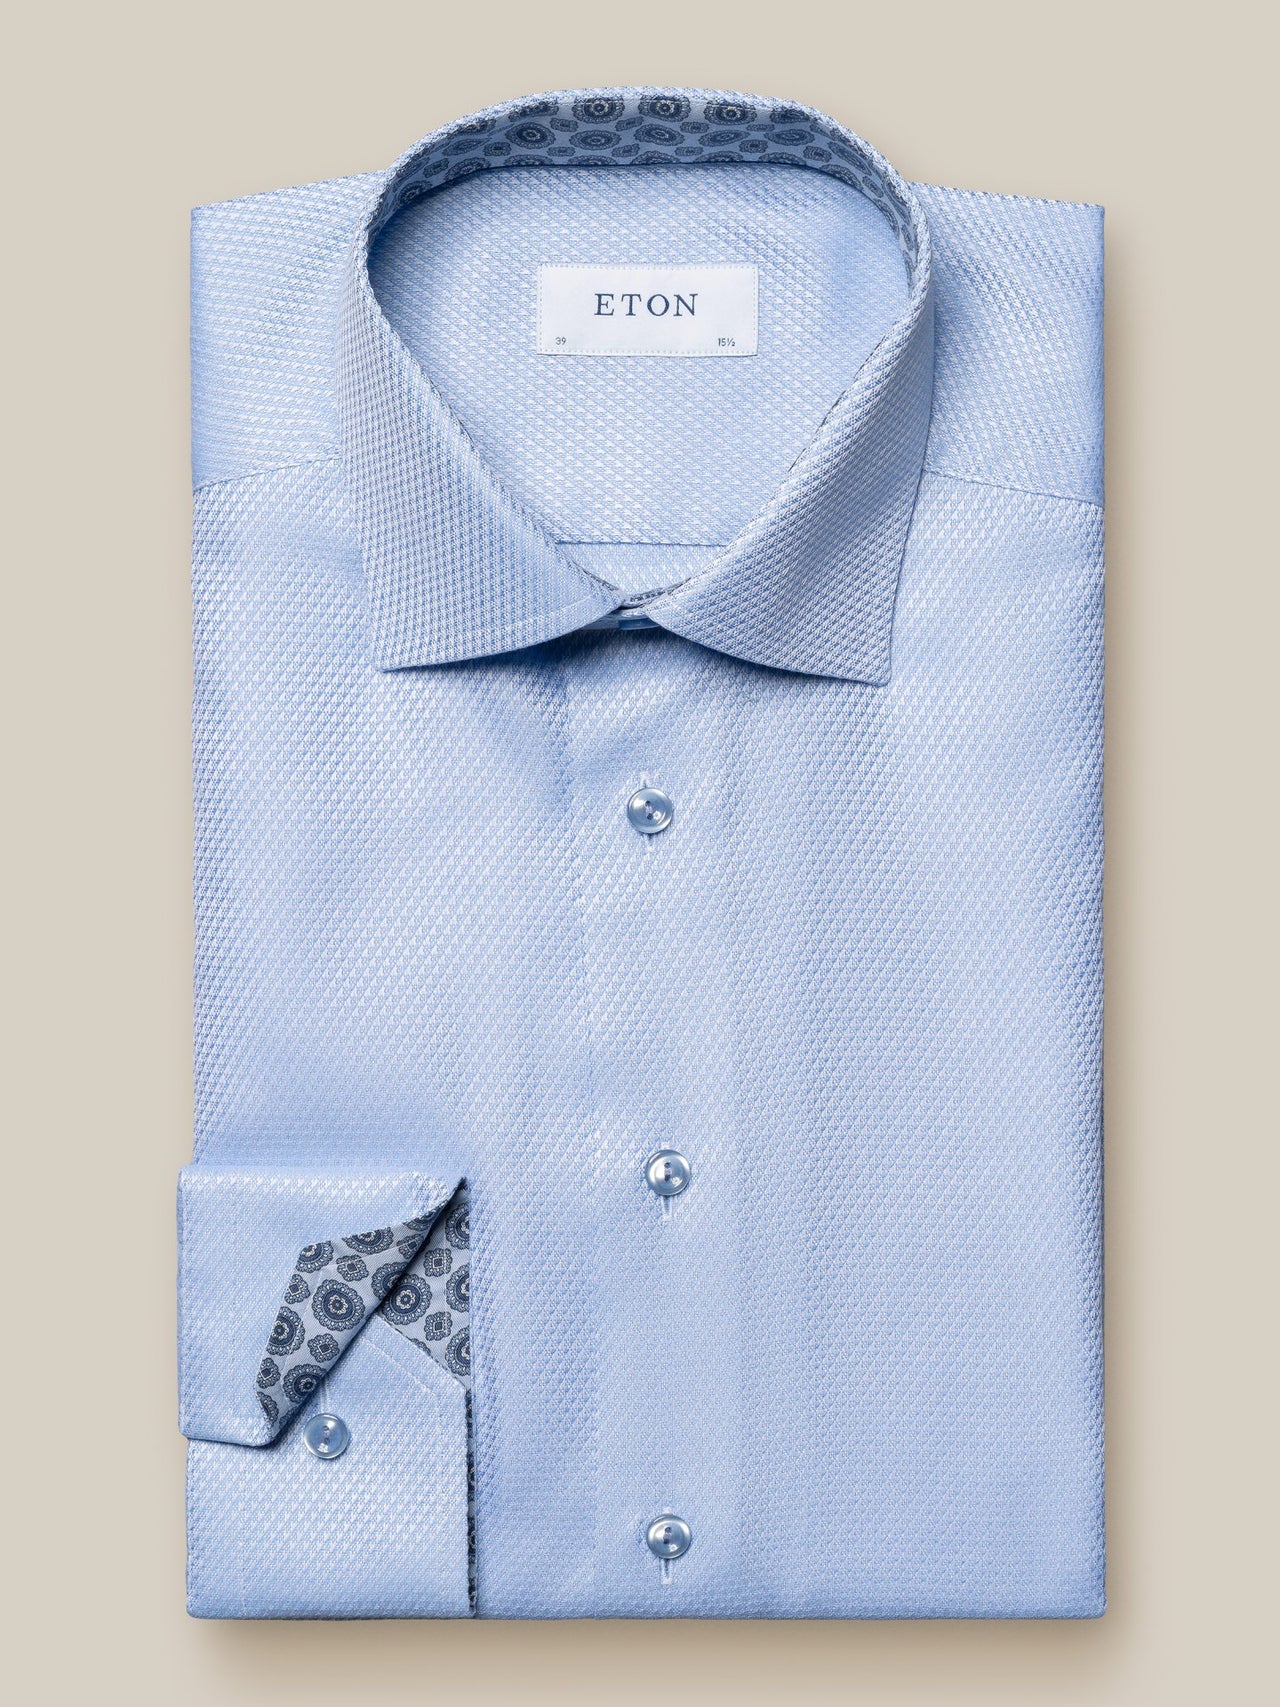 ETON Geometric Twill Long Sleeve Shirt Single Cuff Contemporary Fit LIGHT BLUE